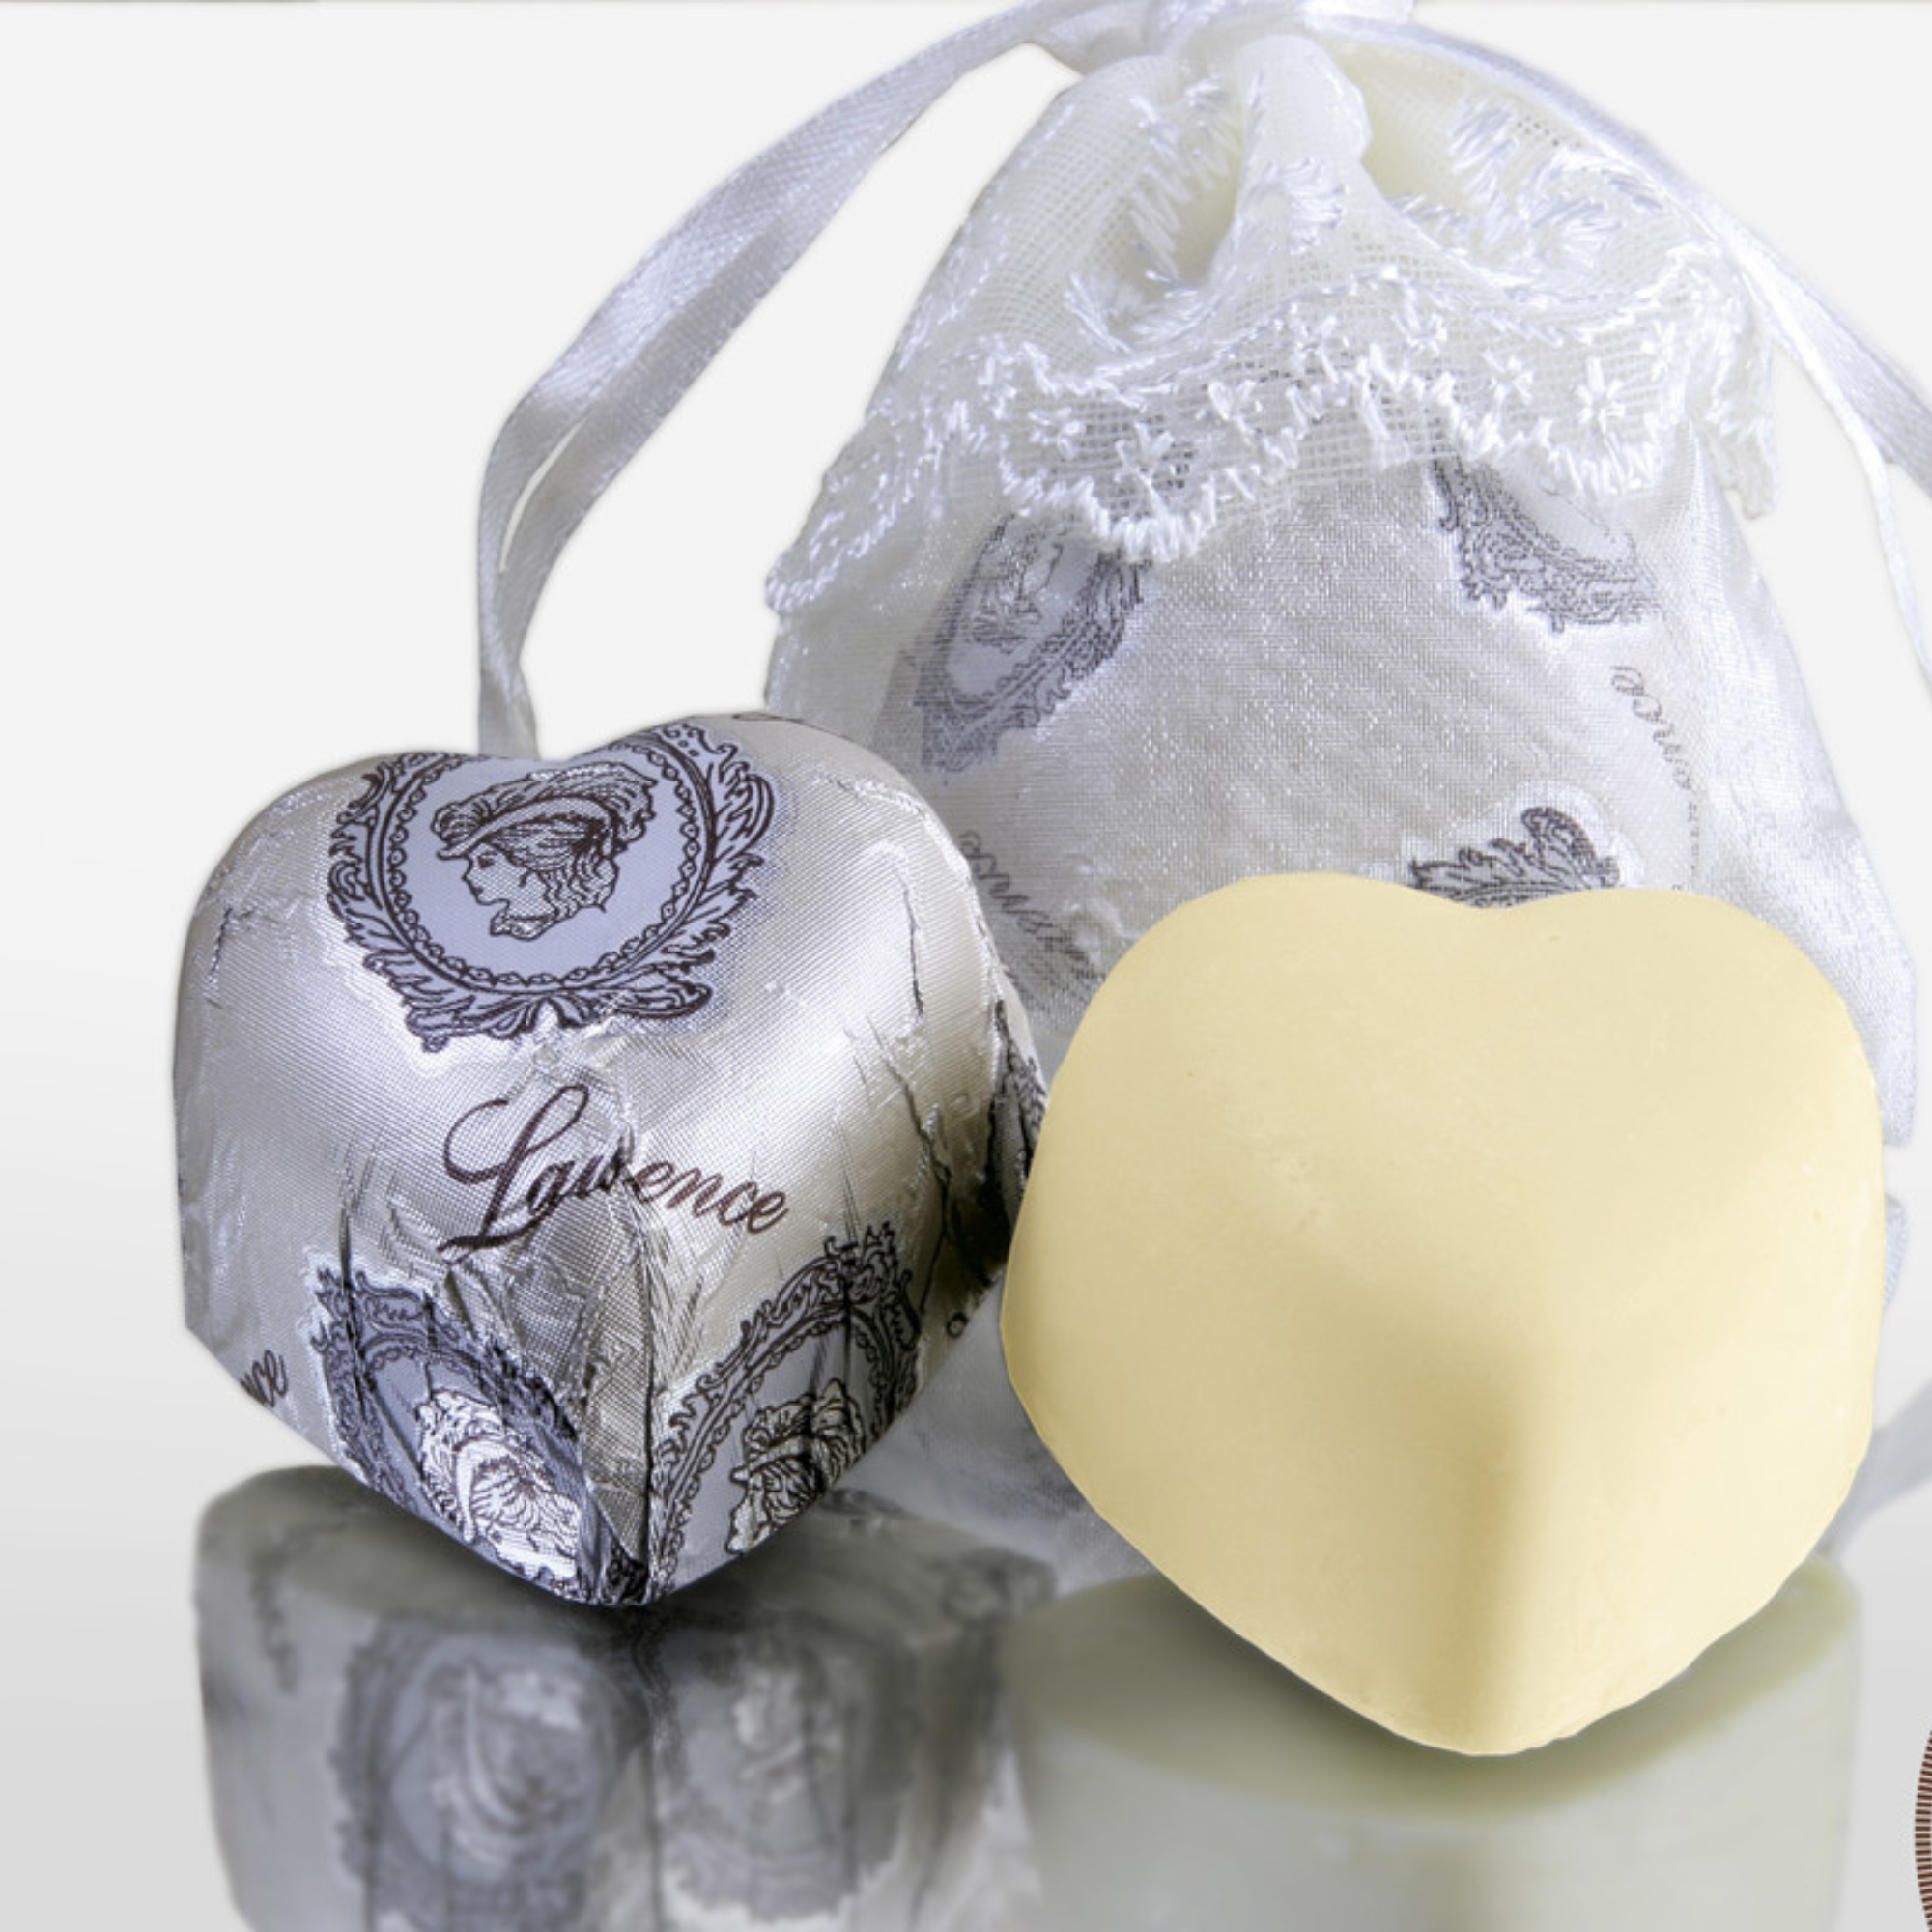 Конфеты из белого шоколада с ореховой начинкой/Laurence White heart with Praline, 3 шт (≈110 г)